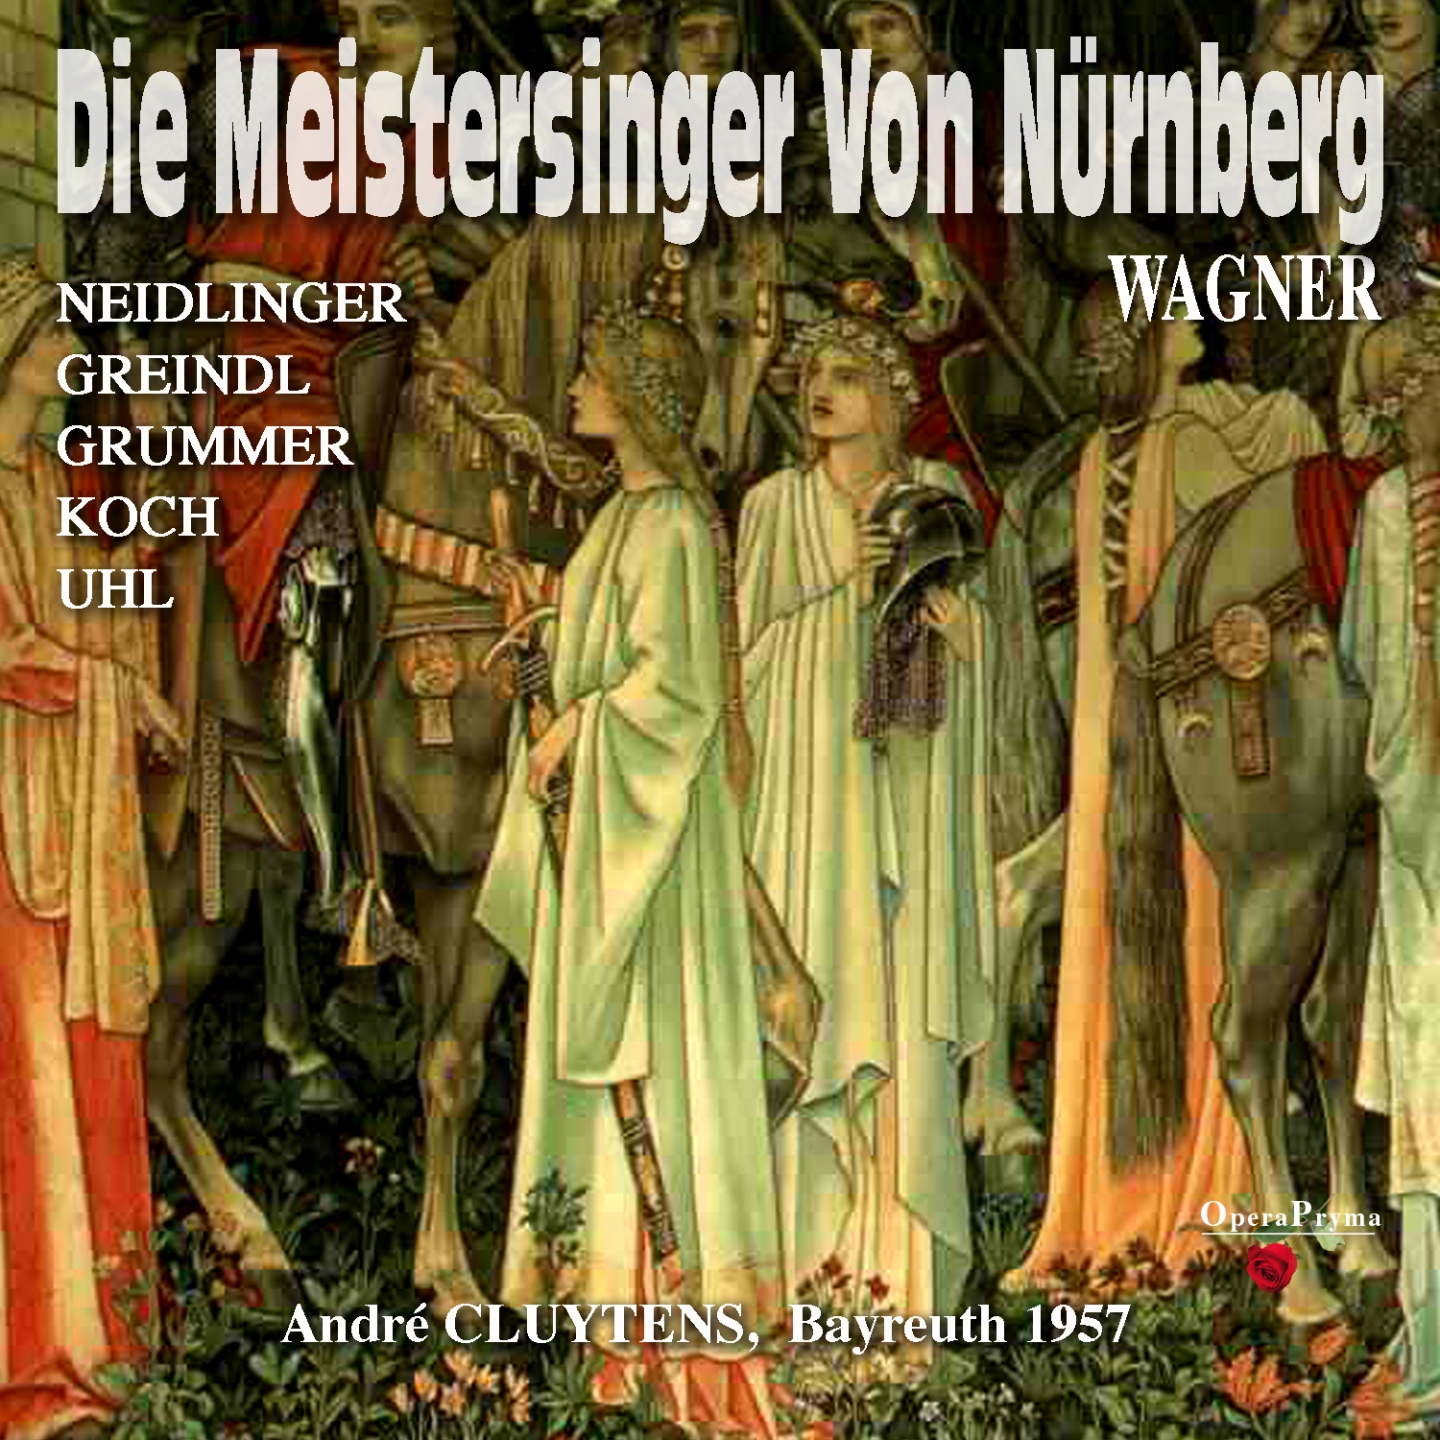 Die Meistersinger von Nü rnberg, Act II: " Hilf Gott, wo bleibst du nur so spat?" Magdalene, Eva